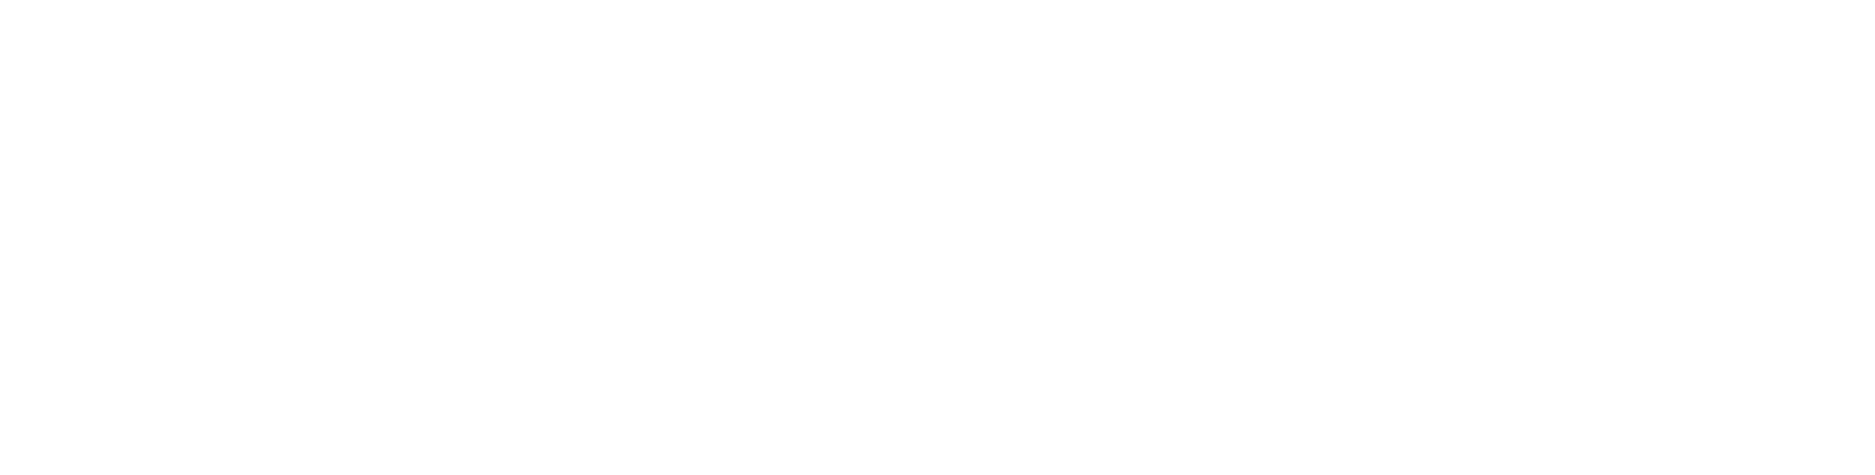 Jhatpat Pay